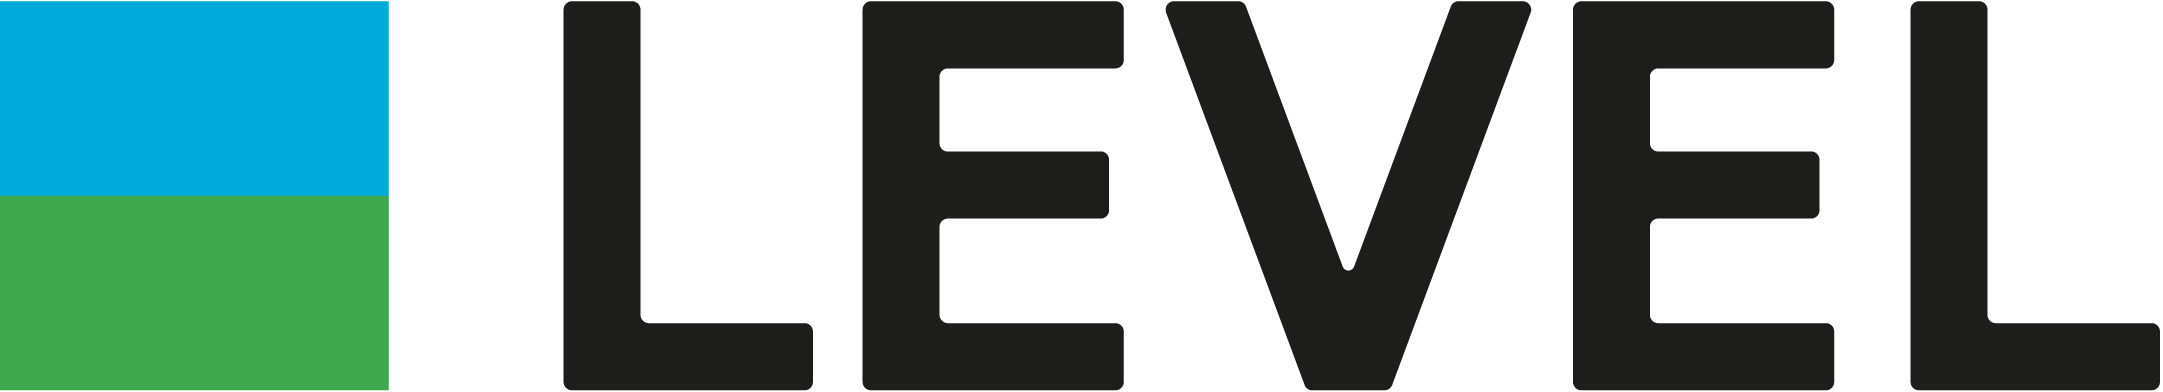 Resultado de imagen para level airlines logo